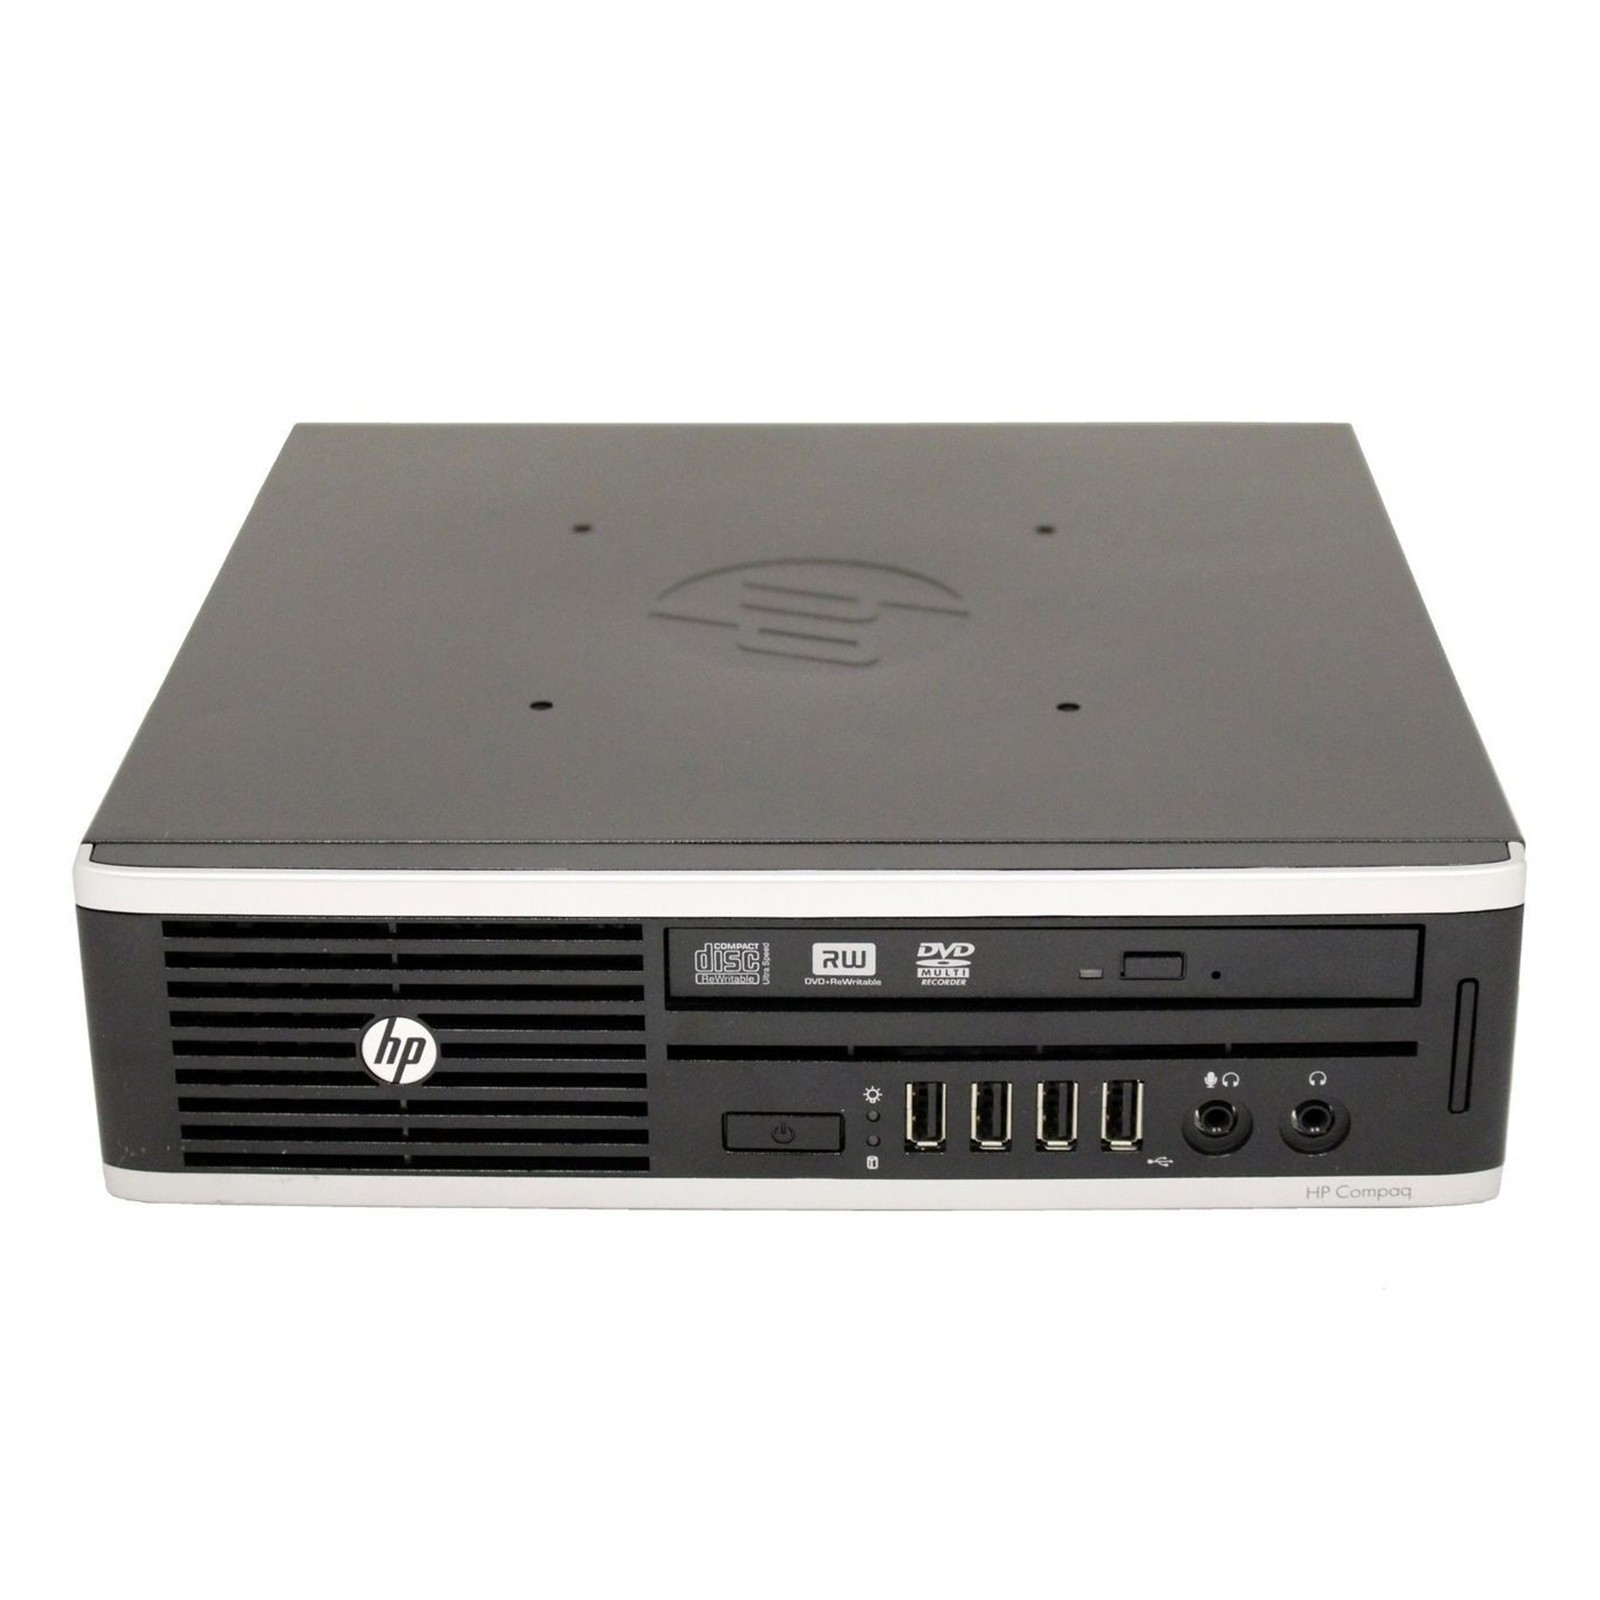 HP Compaq Elite 8200 USDT Front Image